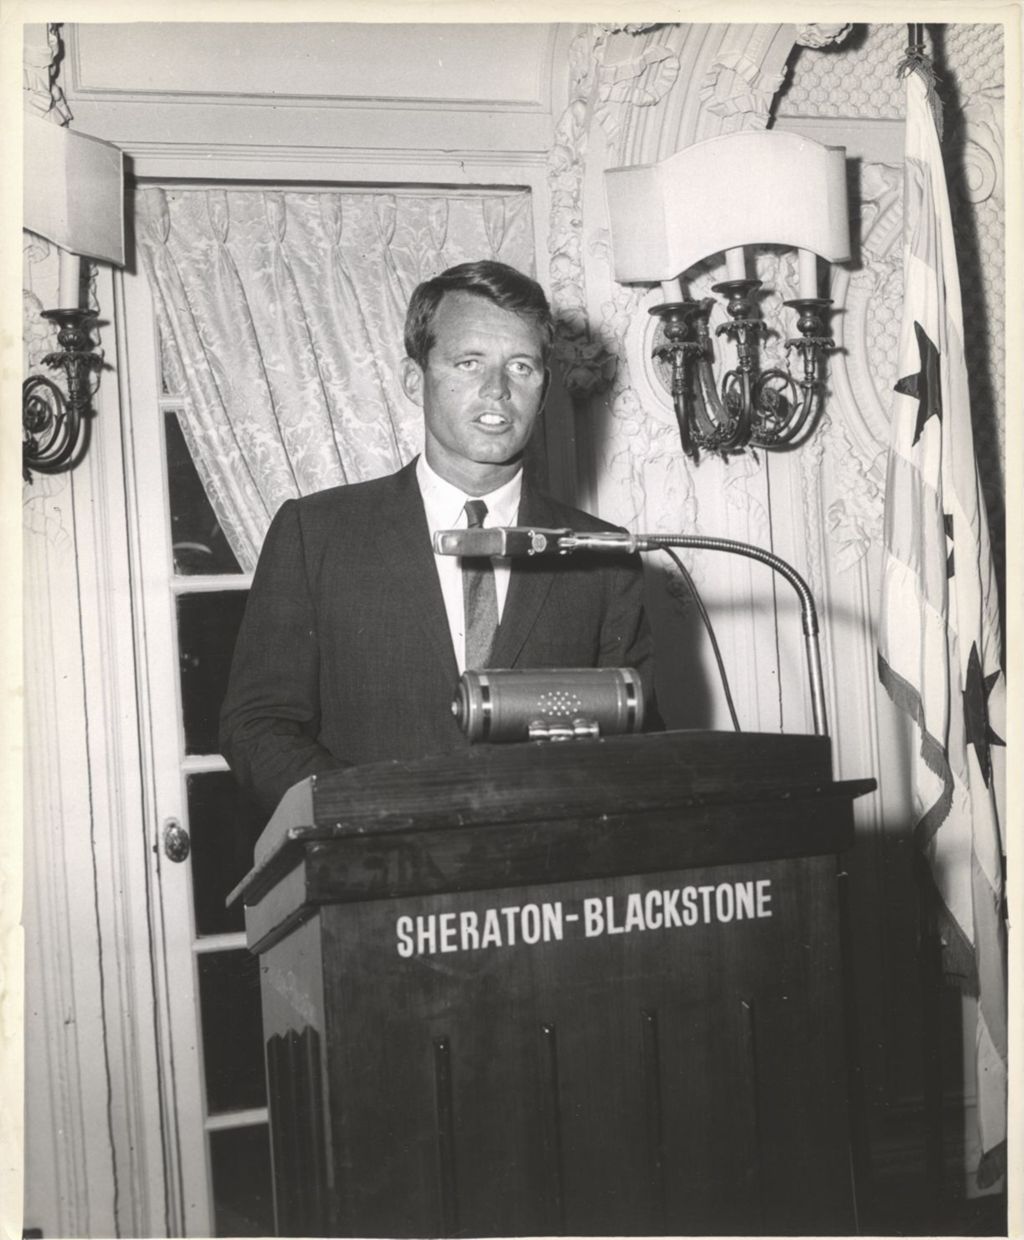 Miniature of Robert Kennedy at a podium